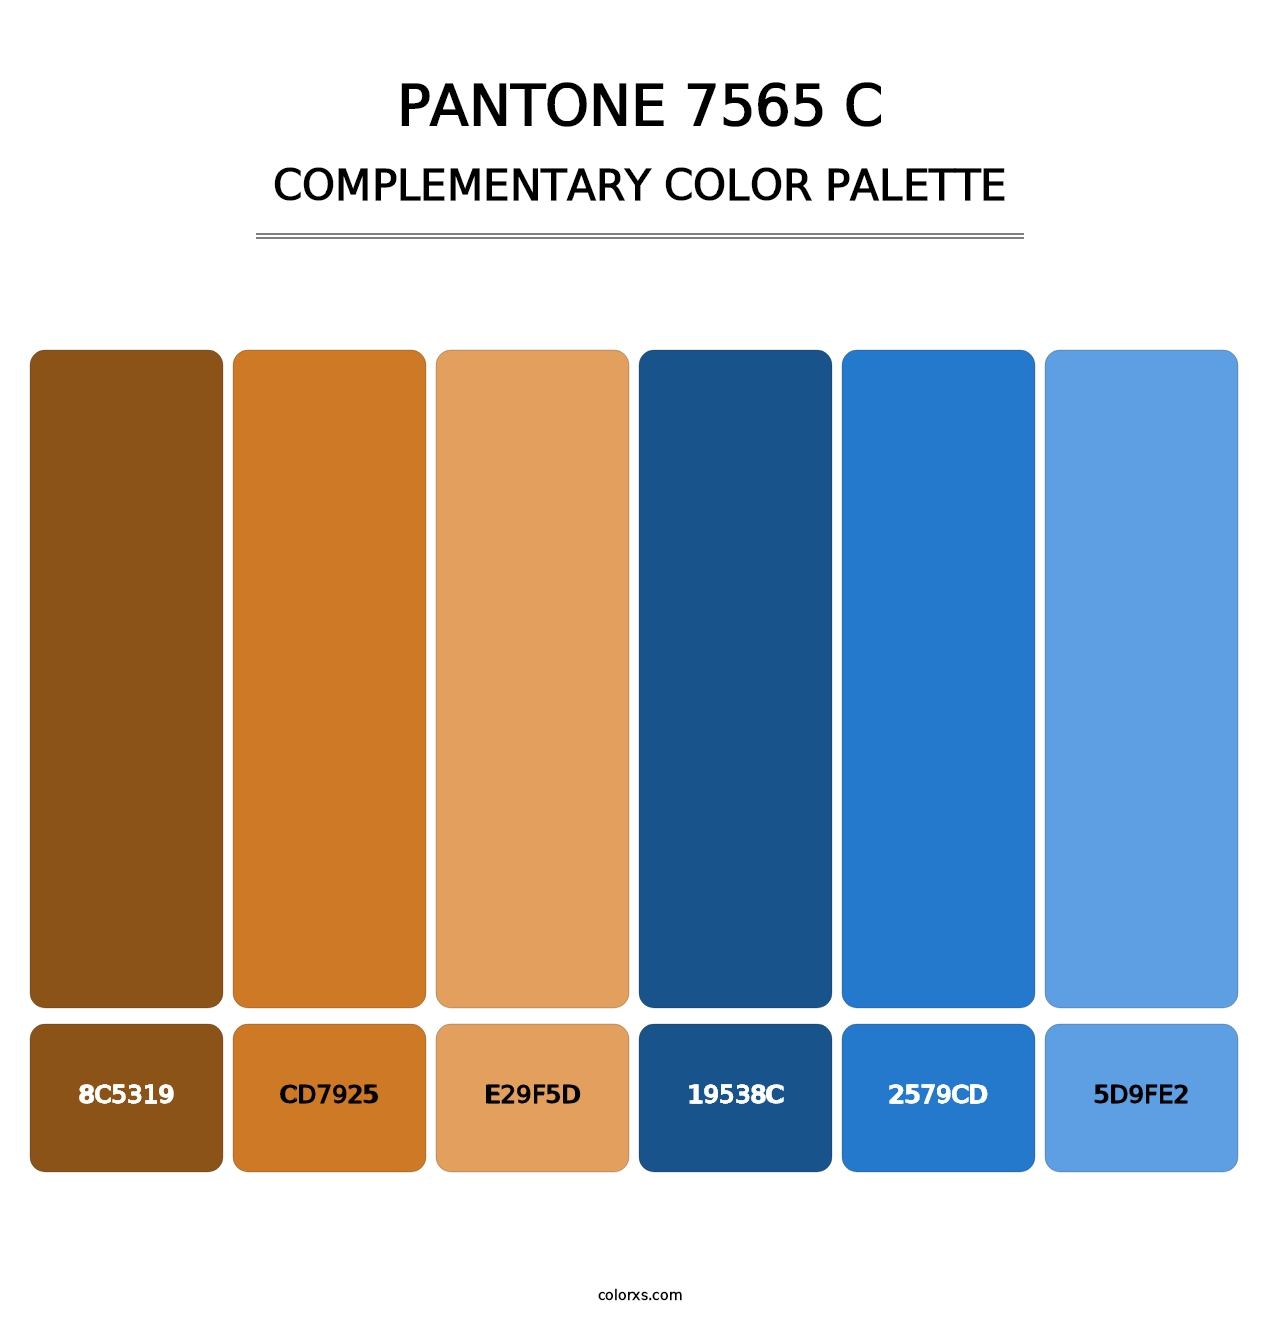 PANTONE 7565 C - Complementary Color Palette